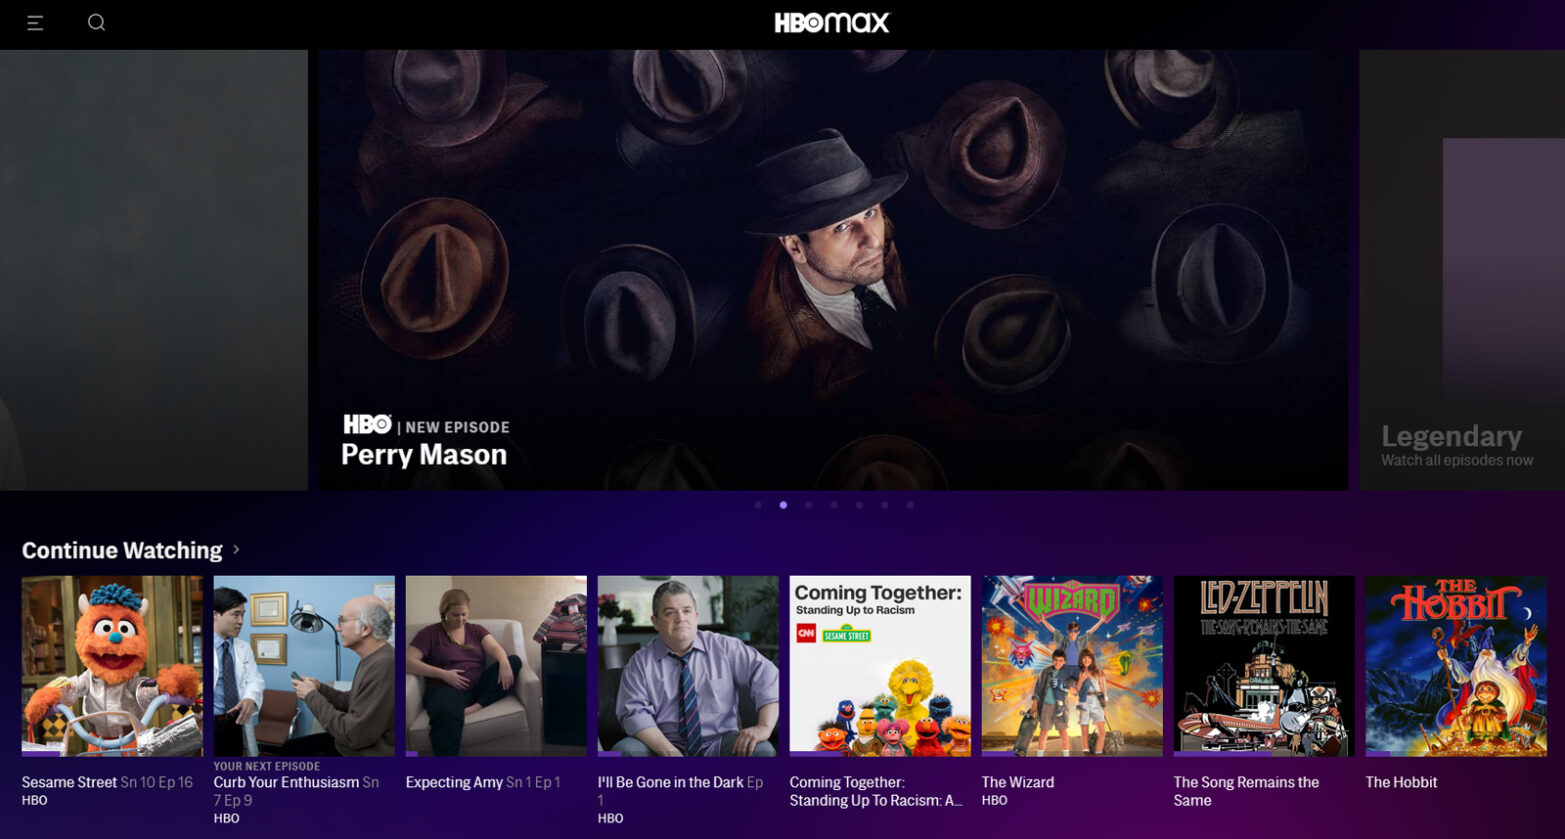 HBO Max homescreen screenshot